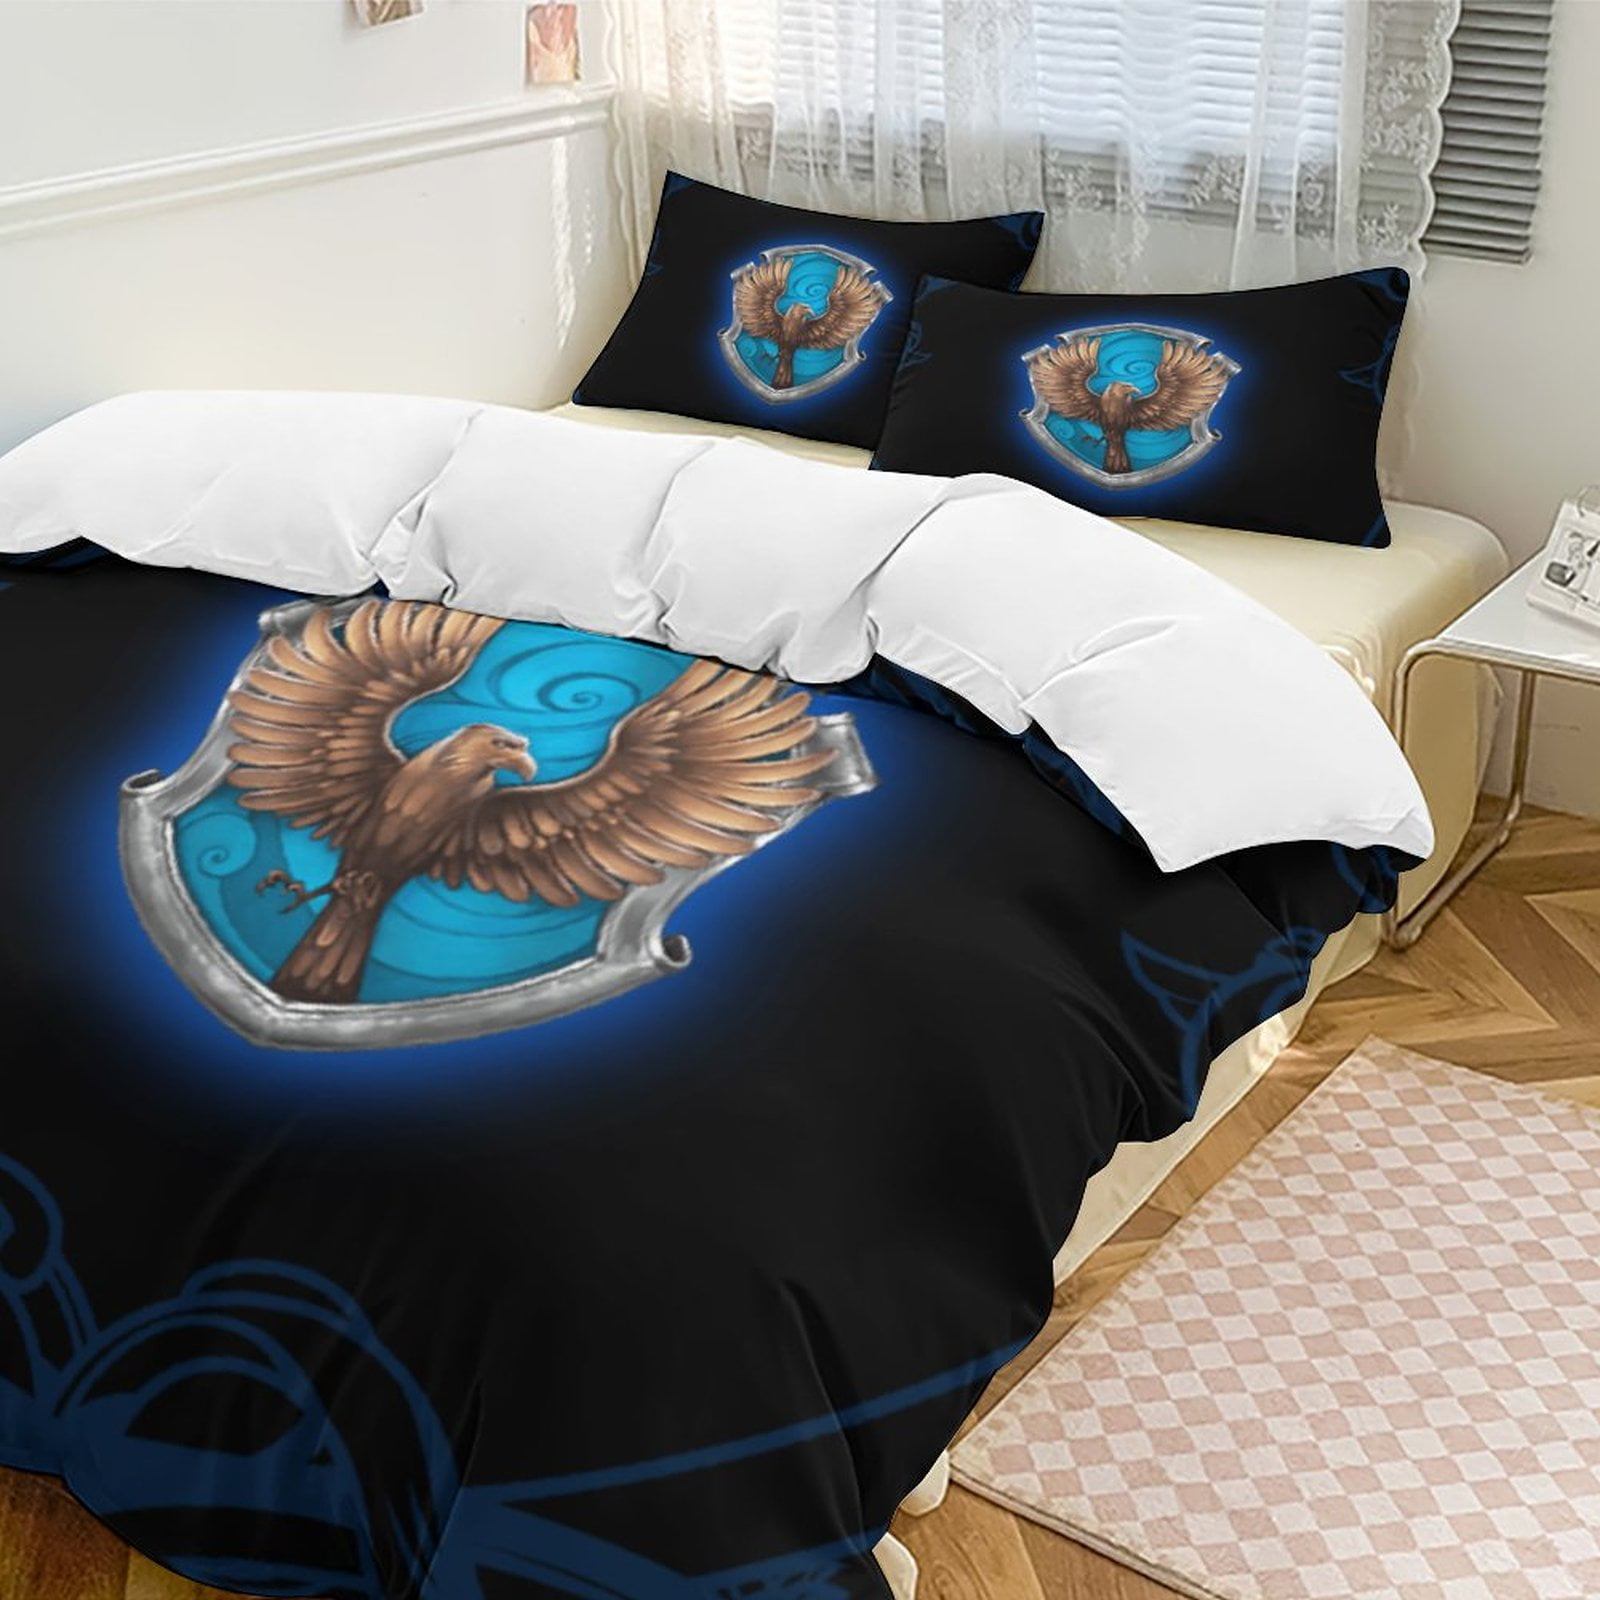 Harry Potter Hufflepuff 3-Piece Bedding Set 102 inchx90 inch Duvet Cover & 2 Pillow Shams Set Soft Bed Sheets, Size: 102 x 90, Black